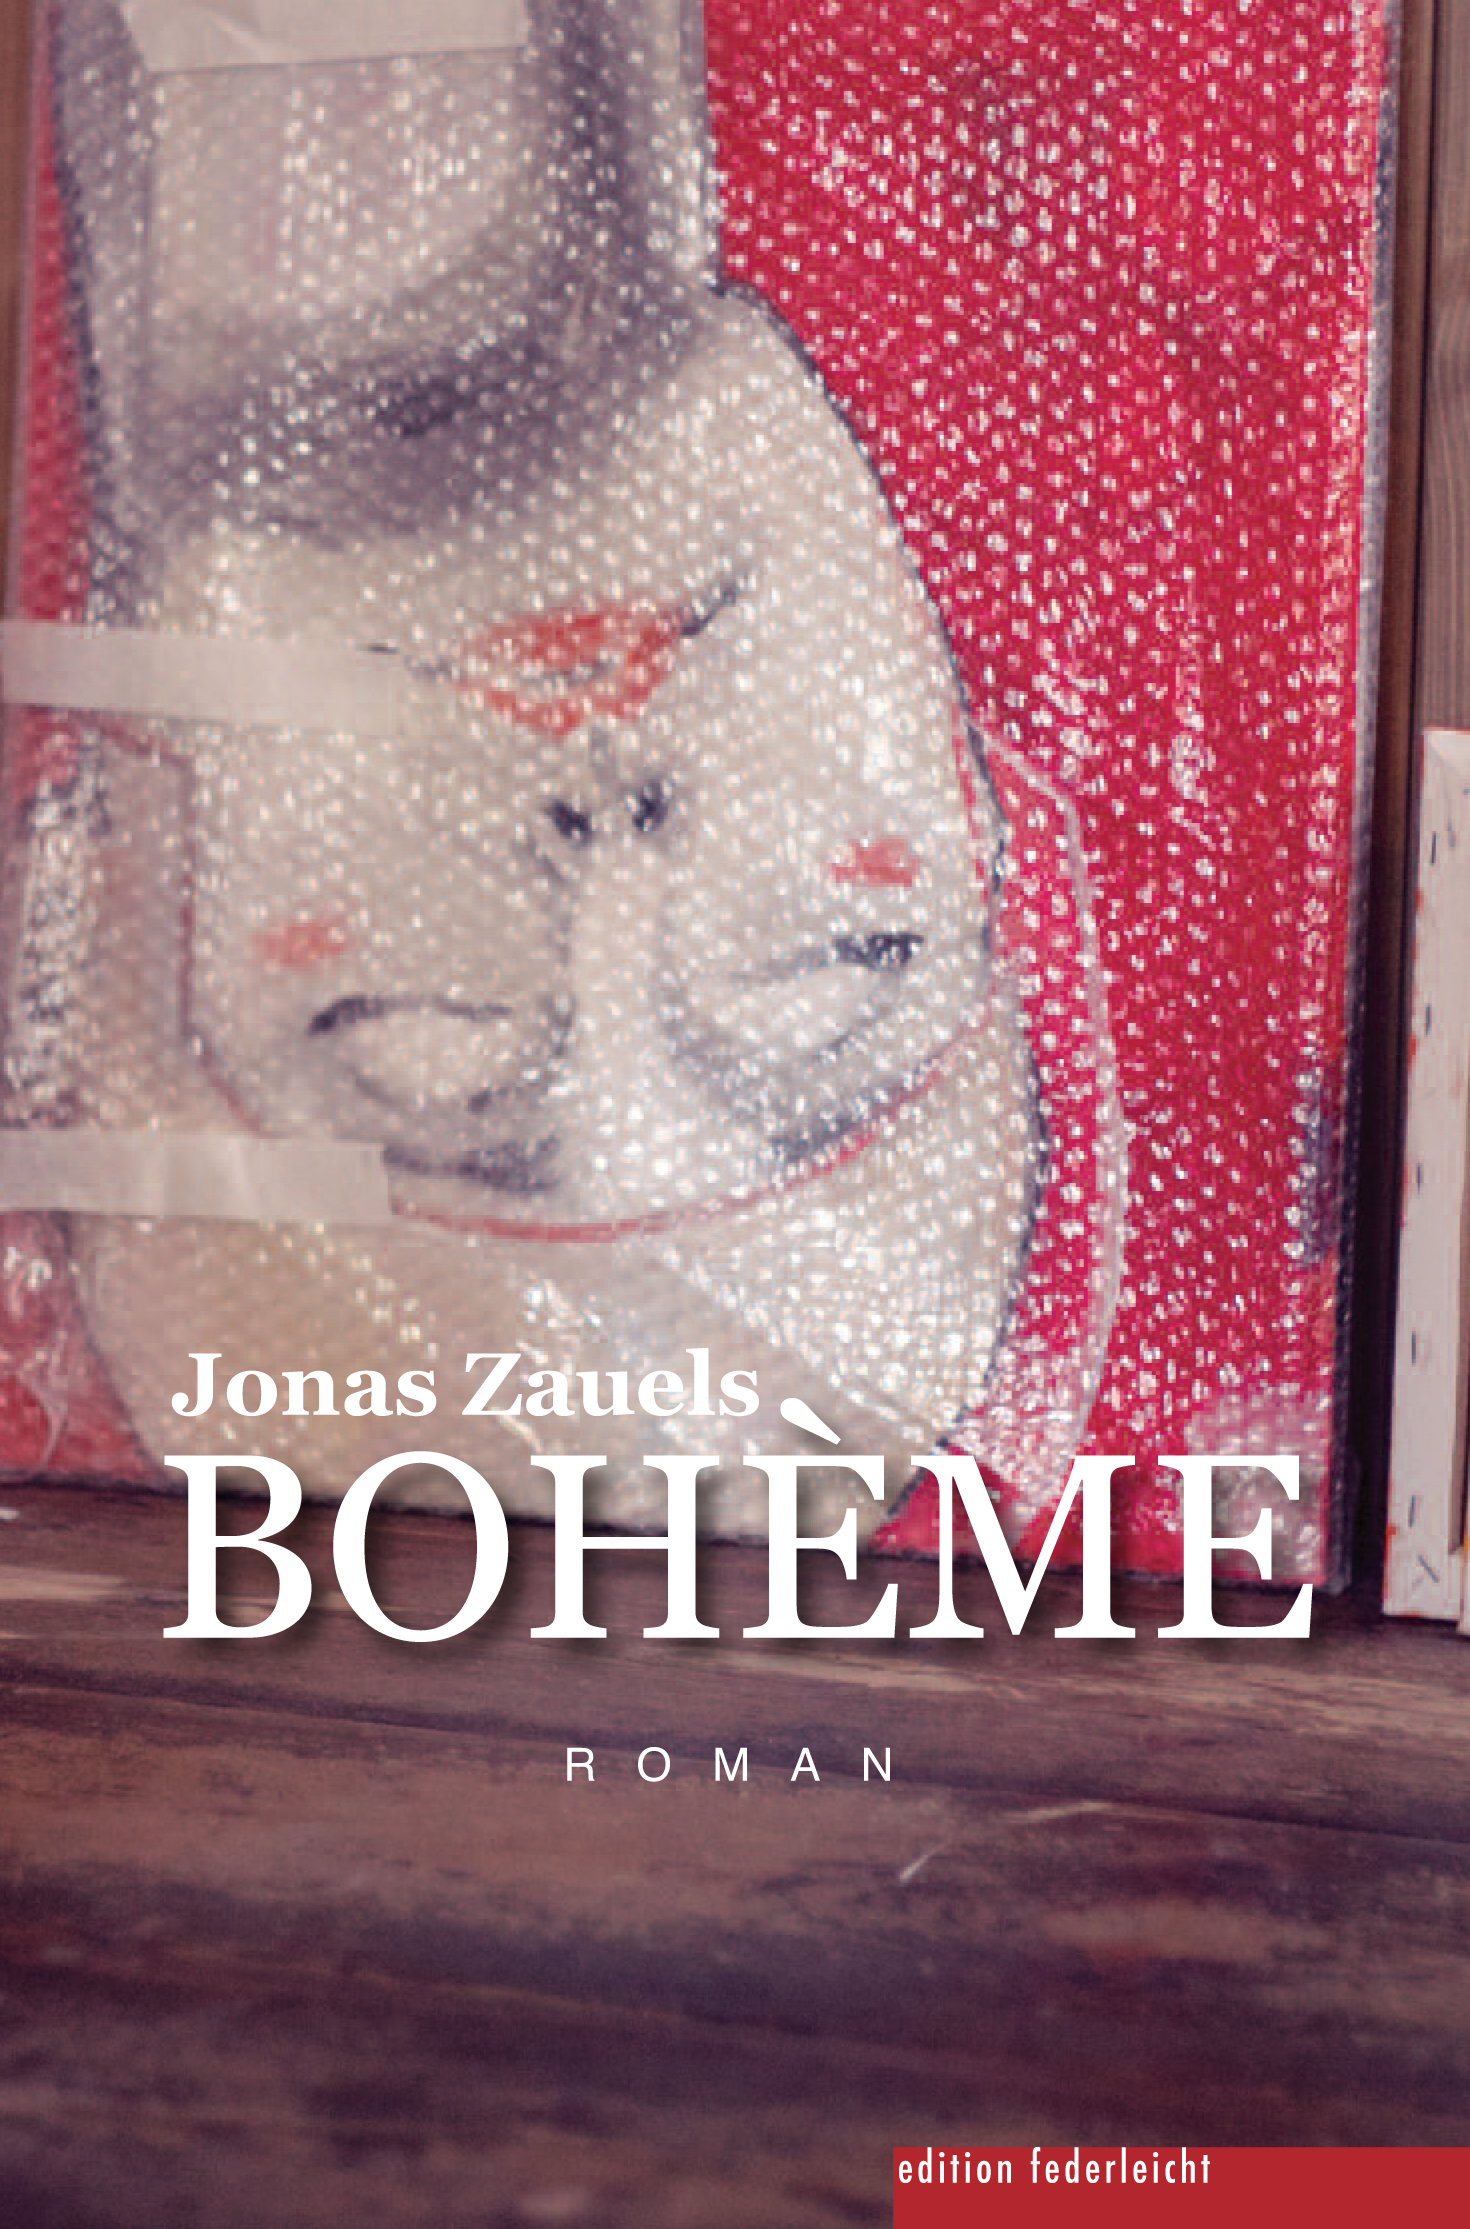 Frankfurter Buchmesse #fbm digital – Jonas Zauels liest aus BOHÈME